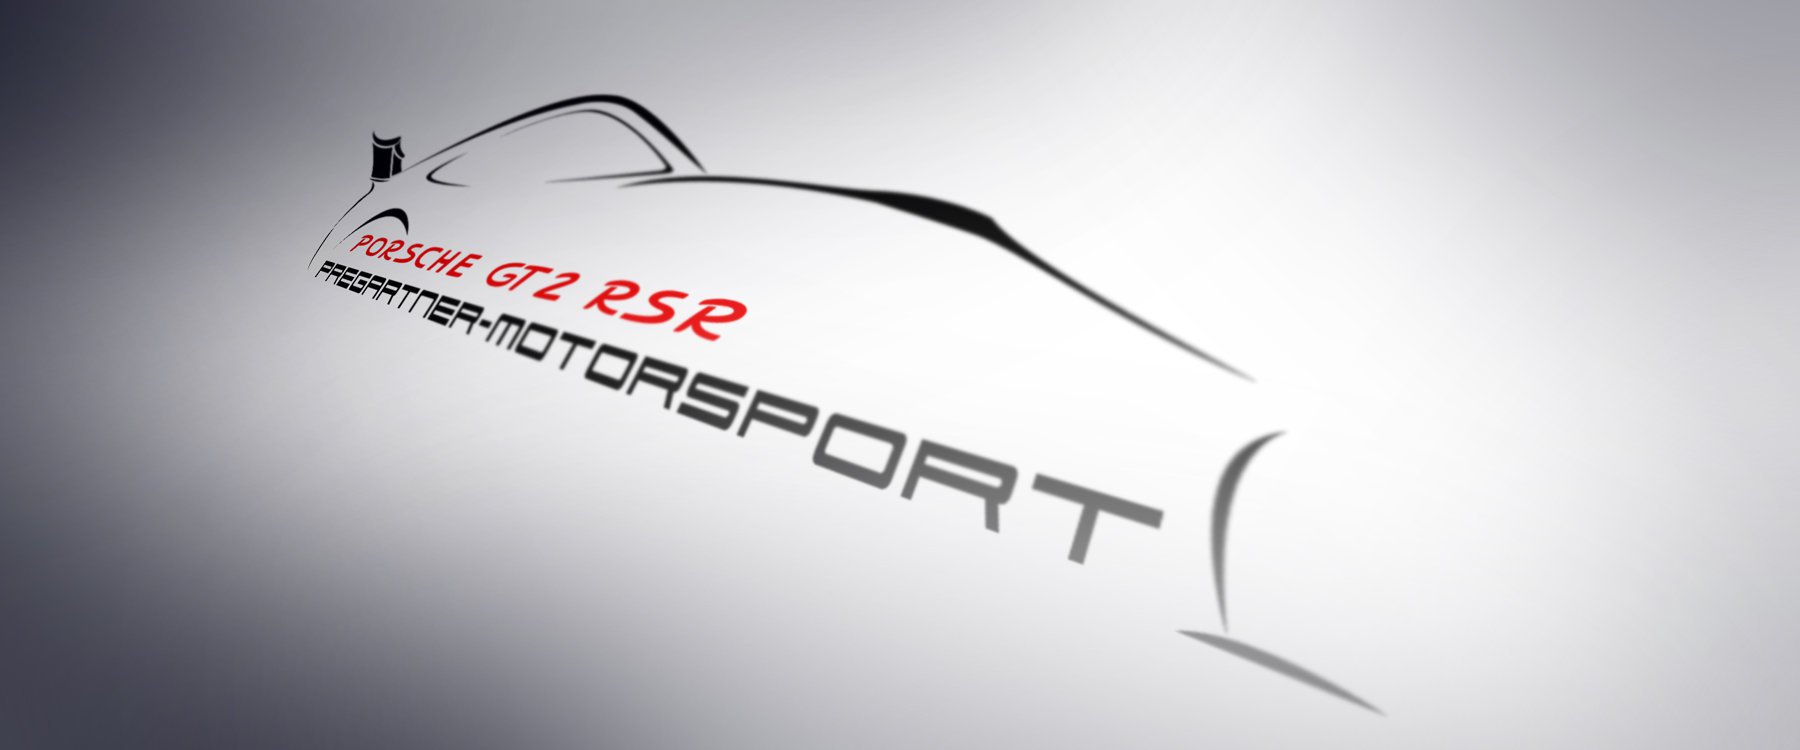 Porsche GT2 RSR Pregartner Motorsport #3